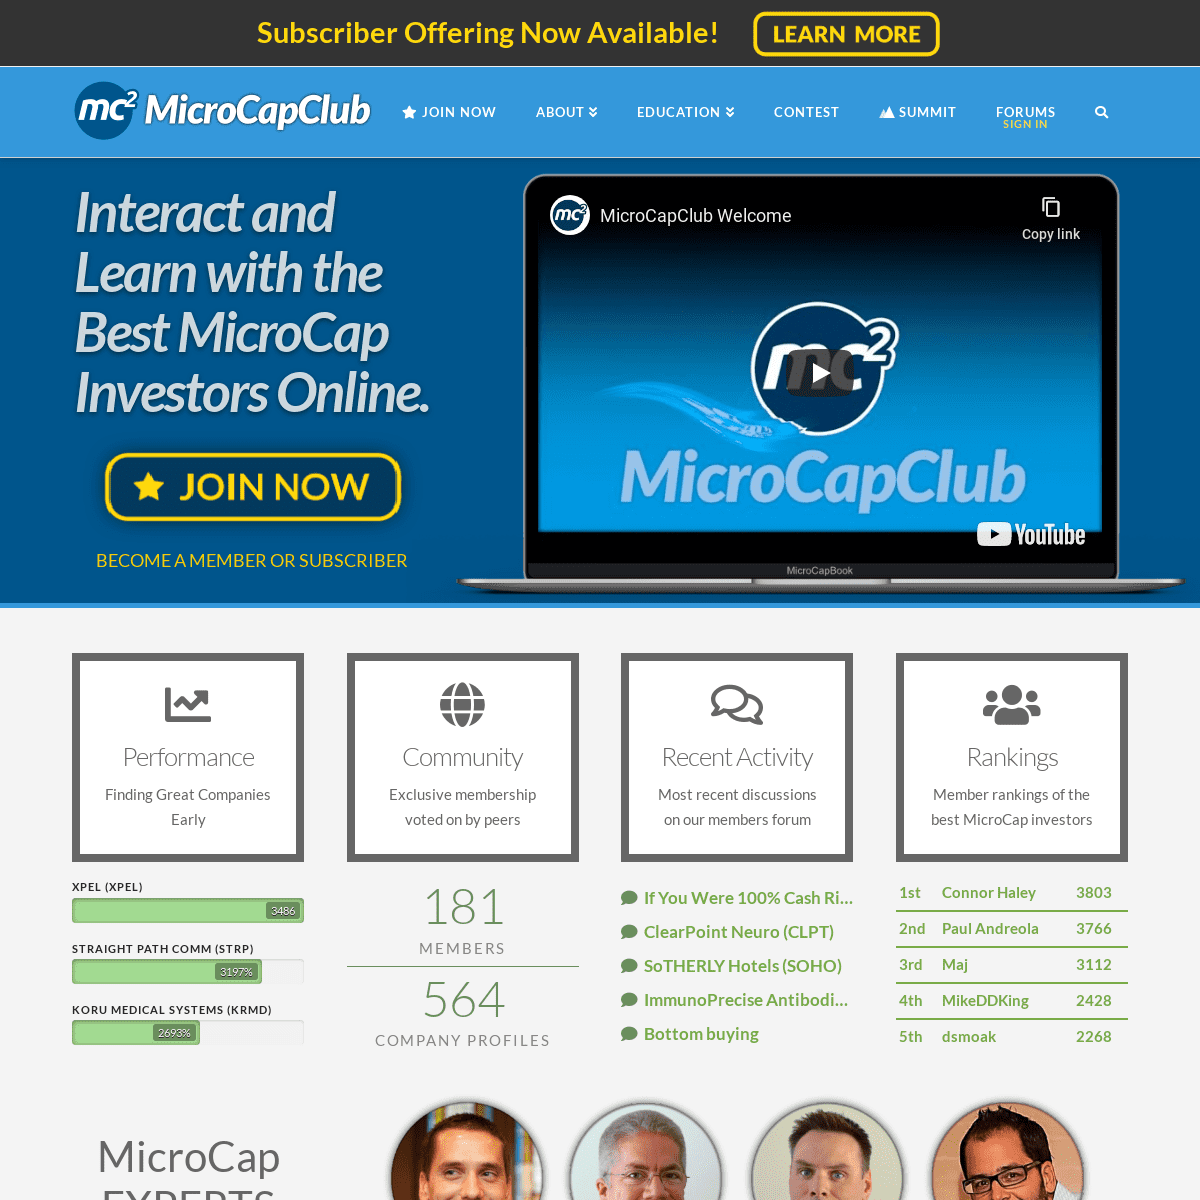 The Best MicroCap Investors Online - MicroCapClub